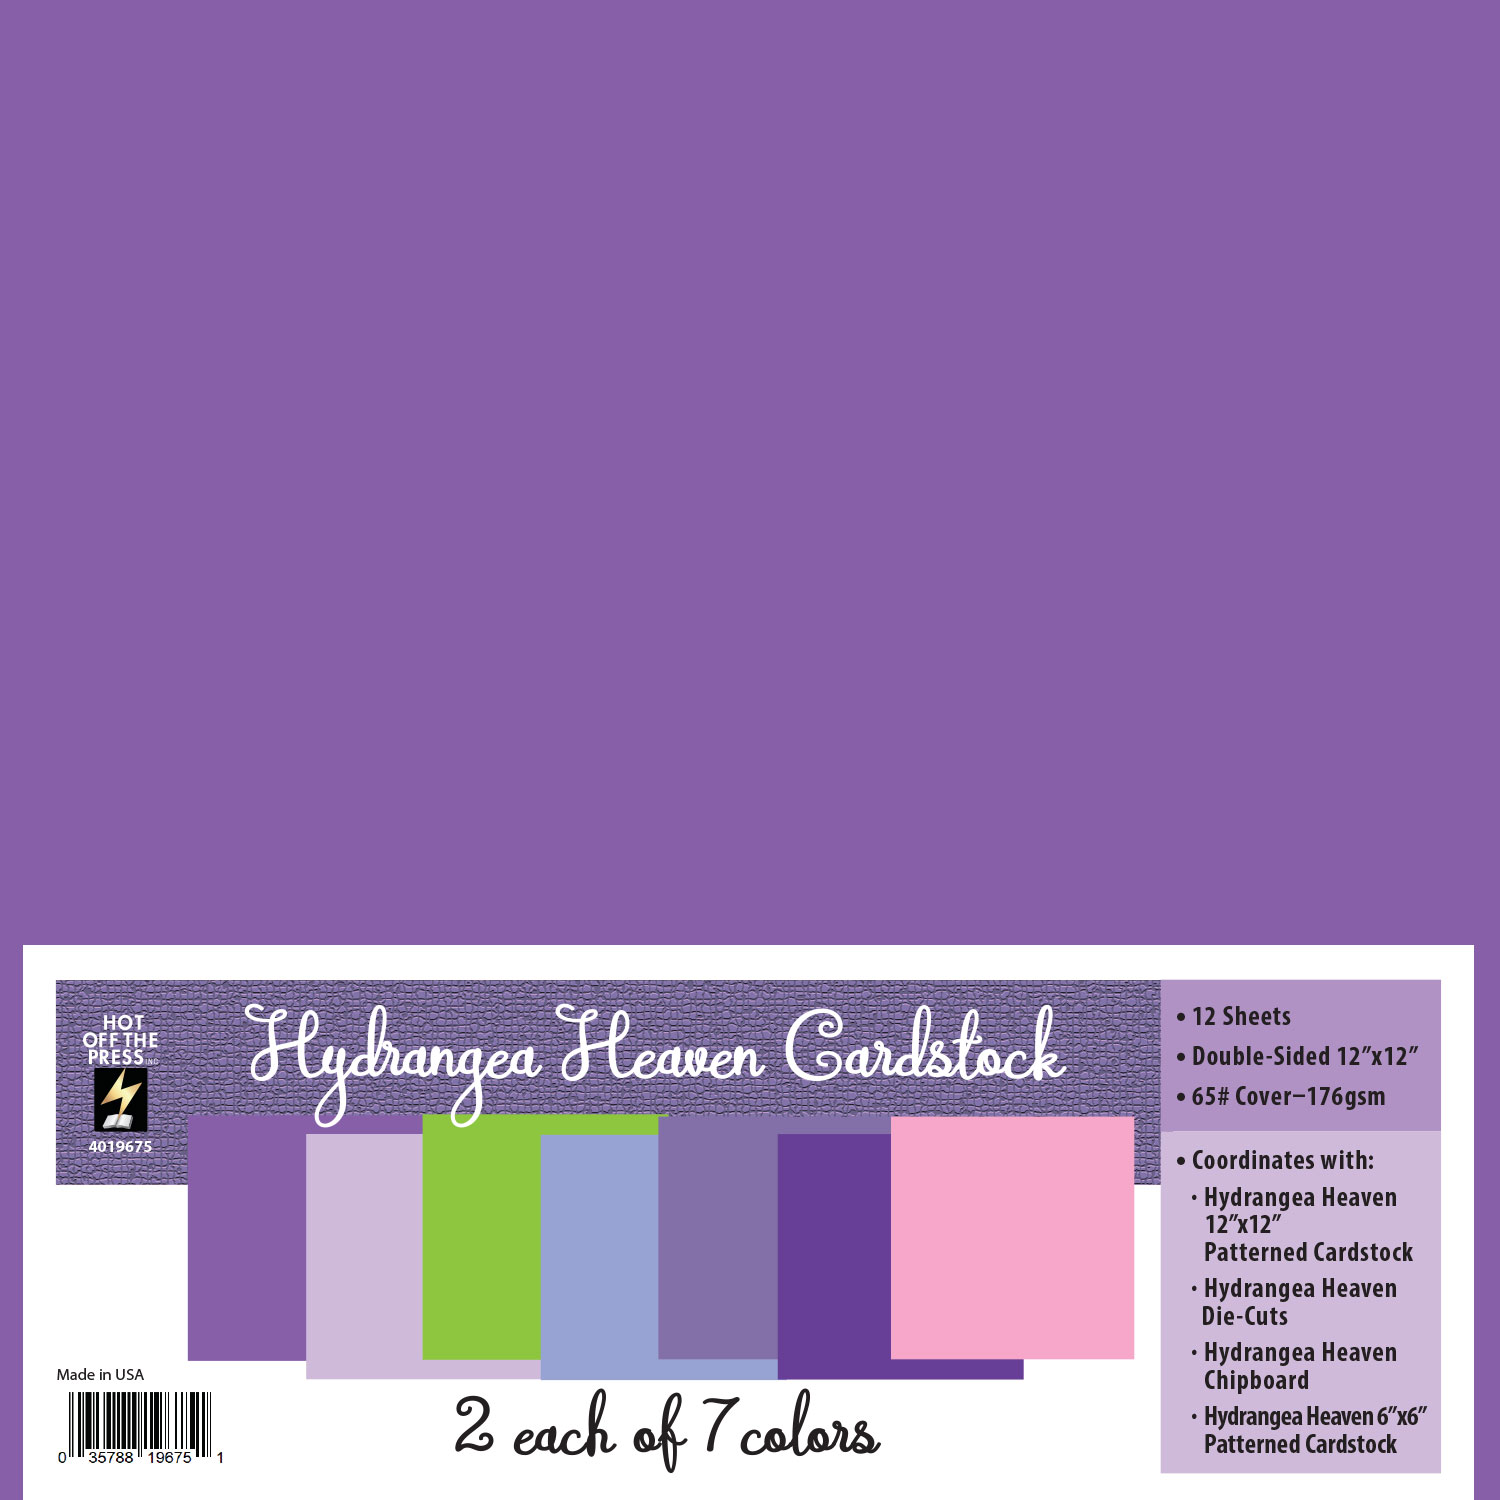 Hydrangea Heaven 12x12 Cardstock